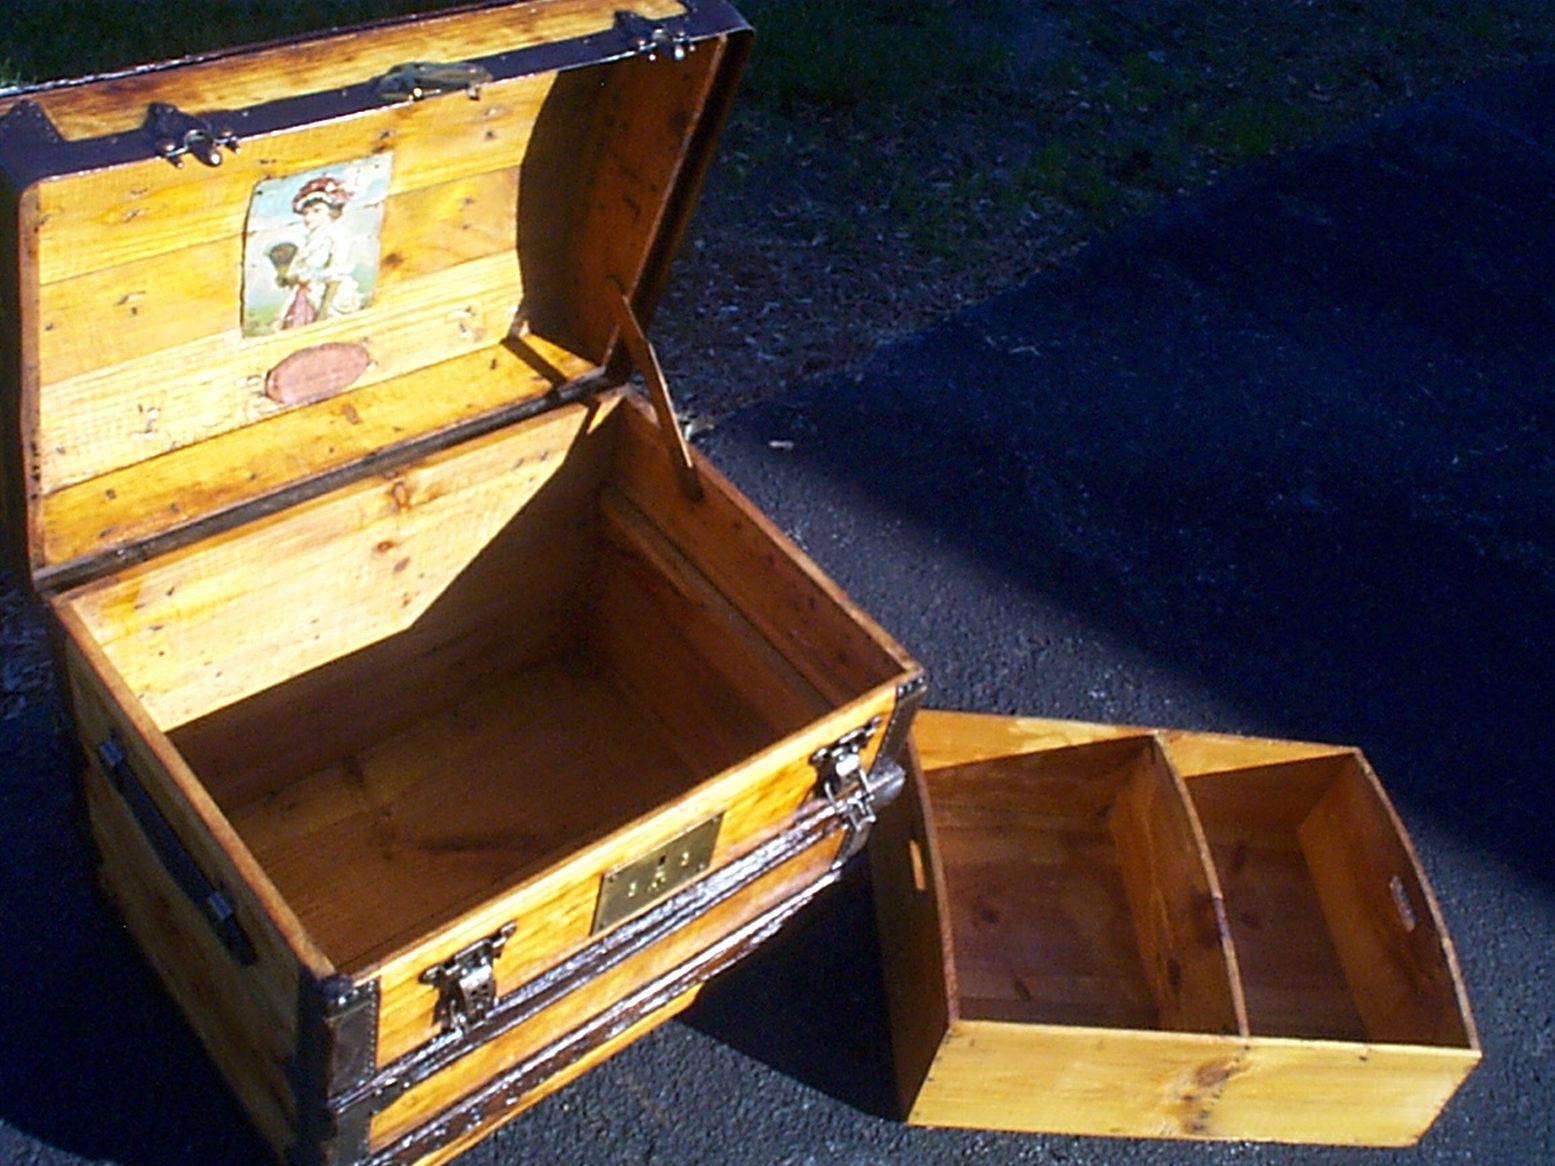 restored wood antique trunk for sale 915